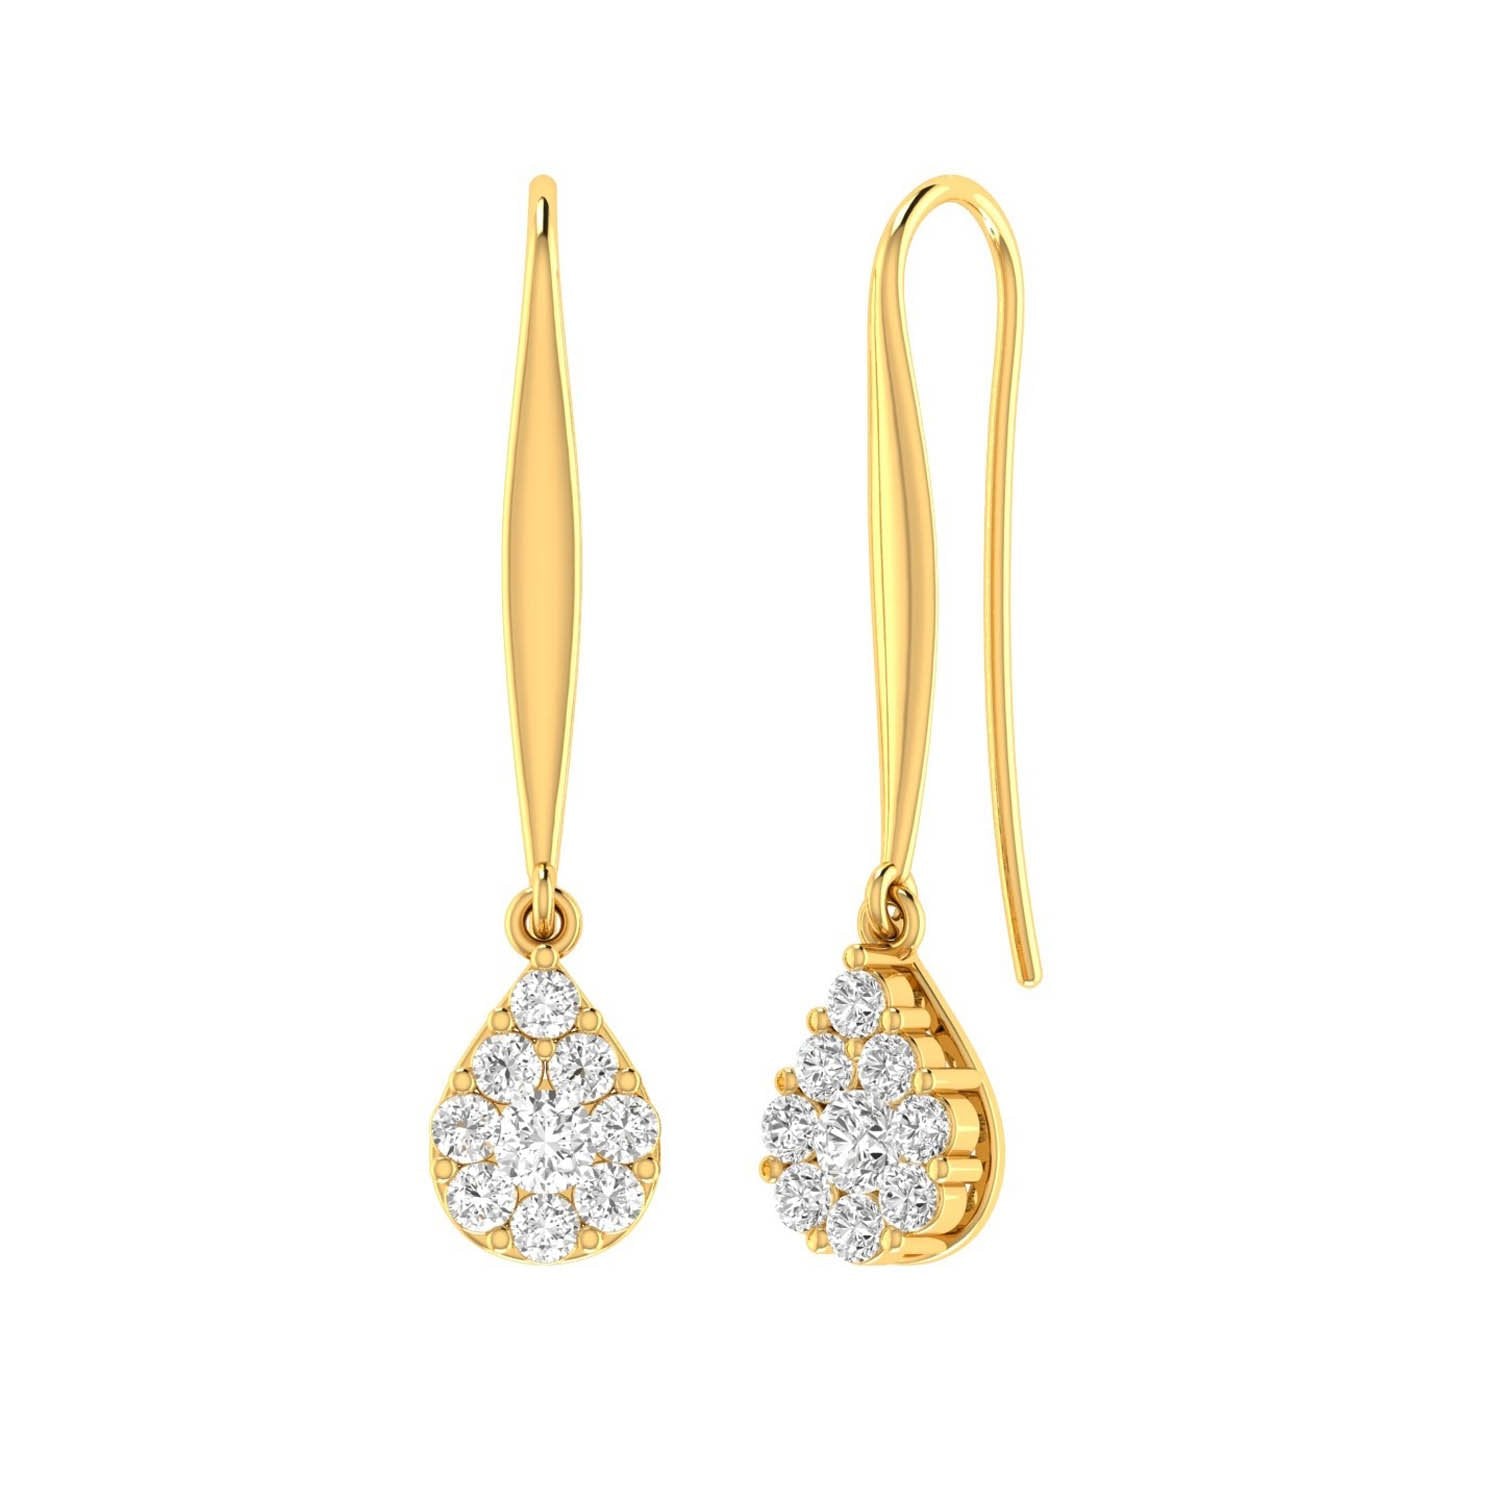 Tear Drop Hook Diamond Earrings with 0.33ct Diamonds in 9K Yellow Gold - 9YTDSH33GH